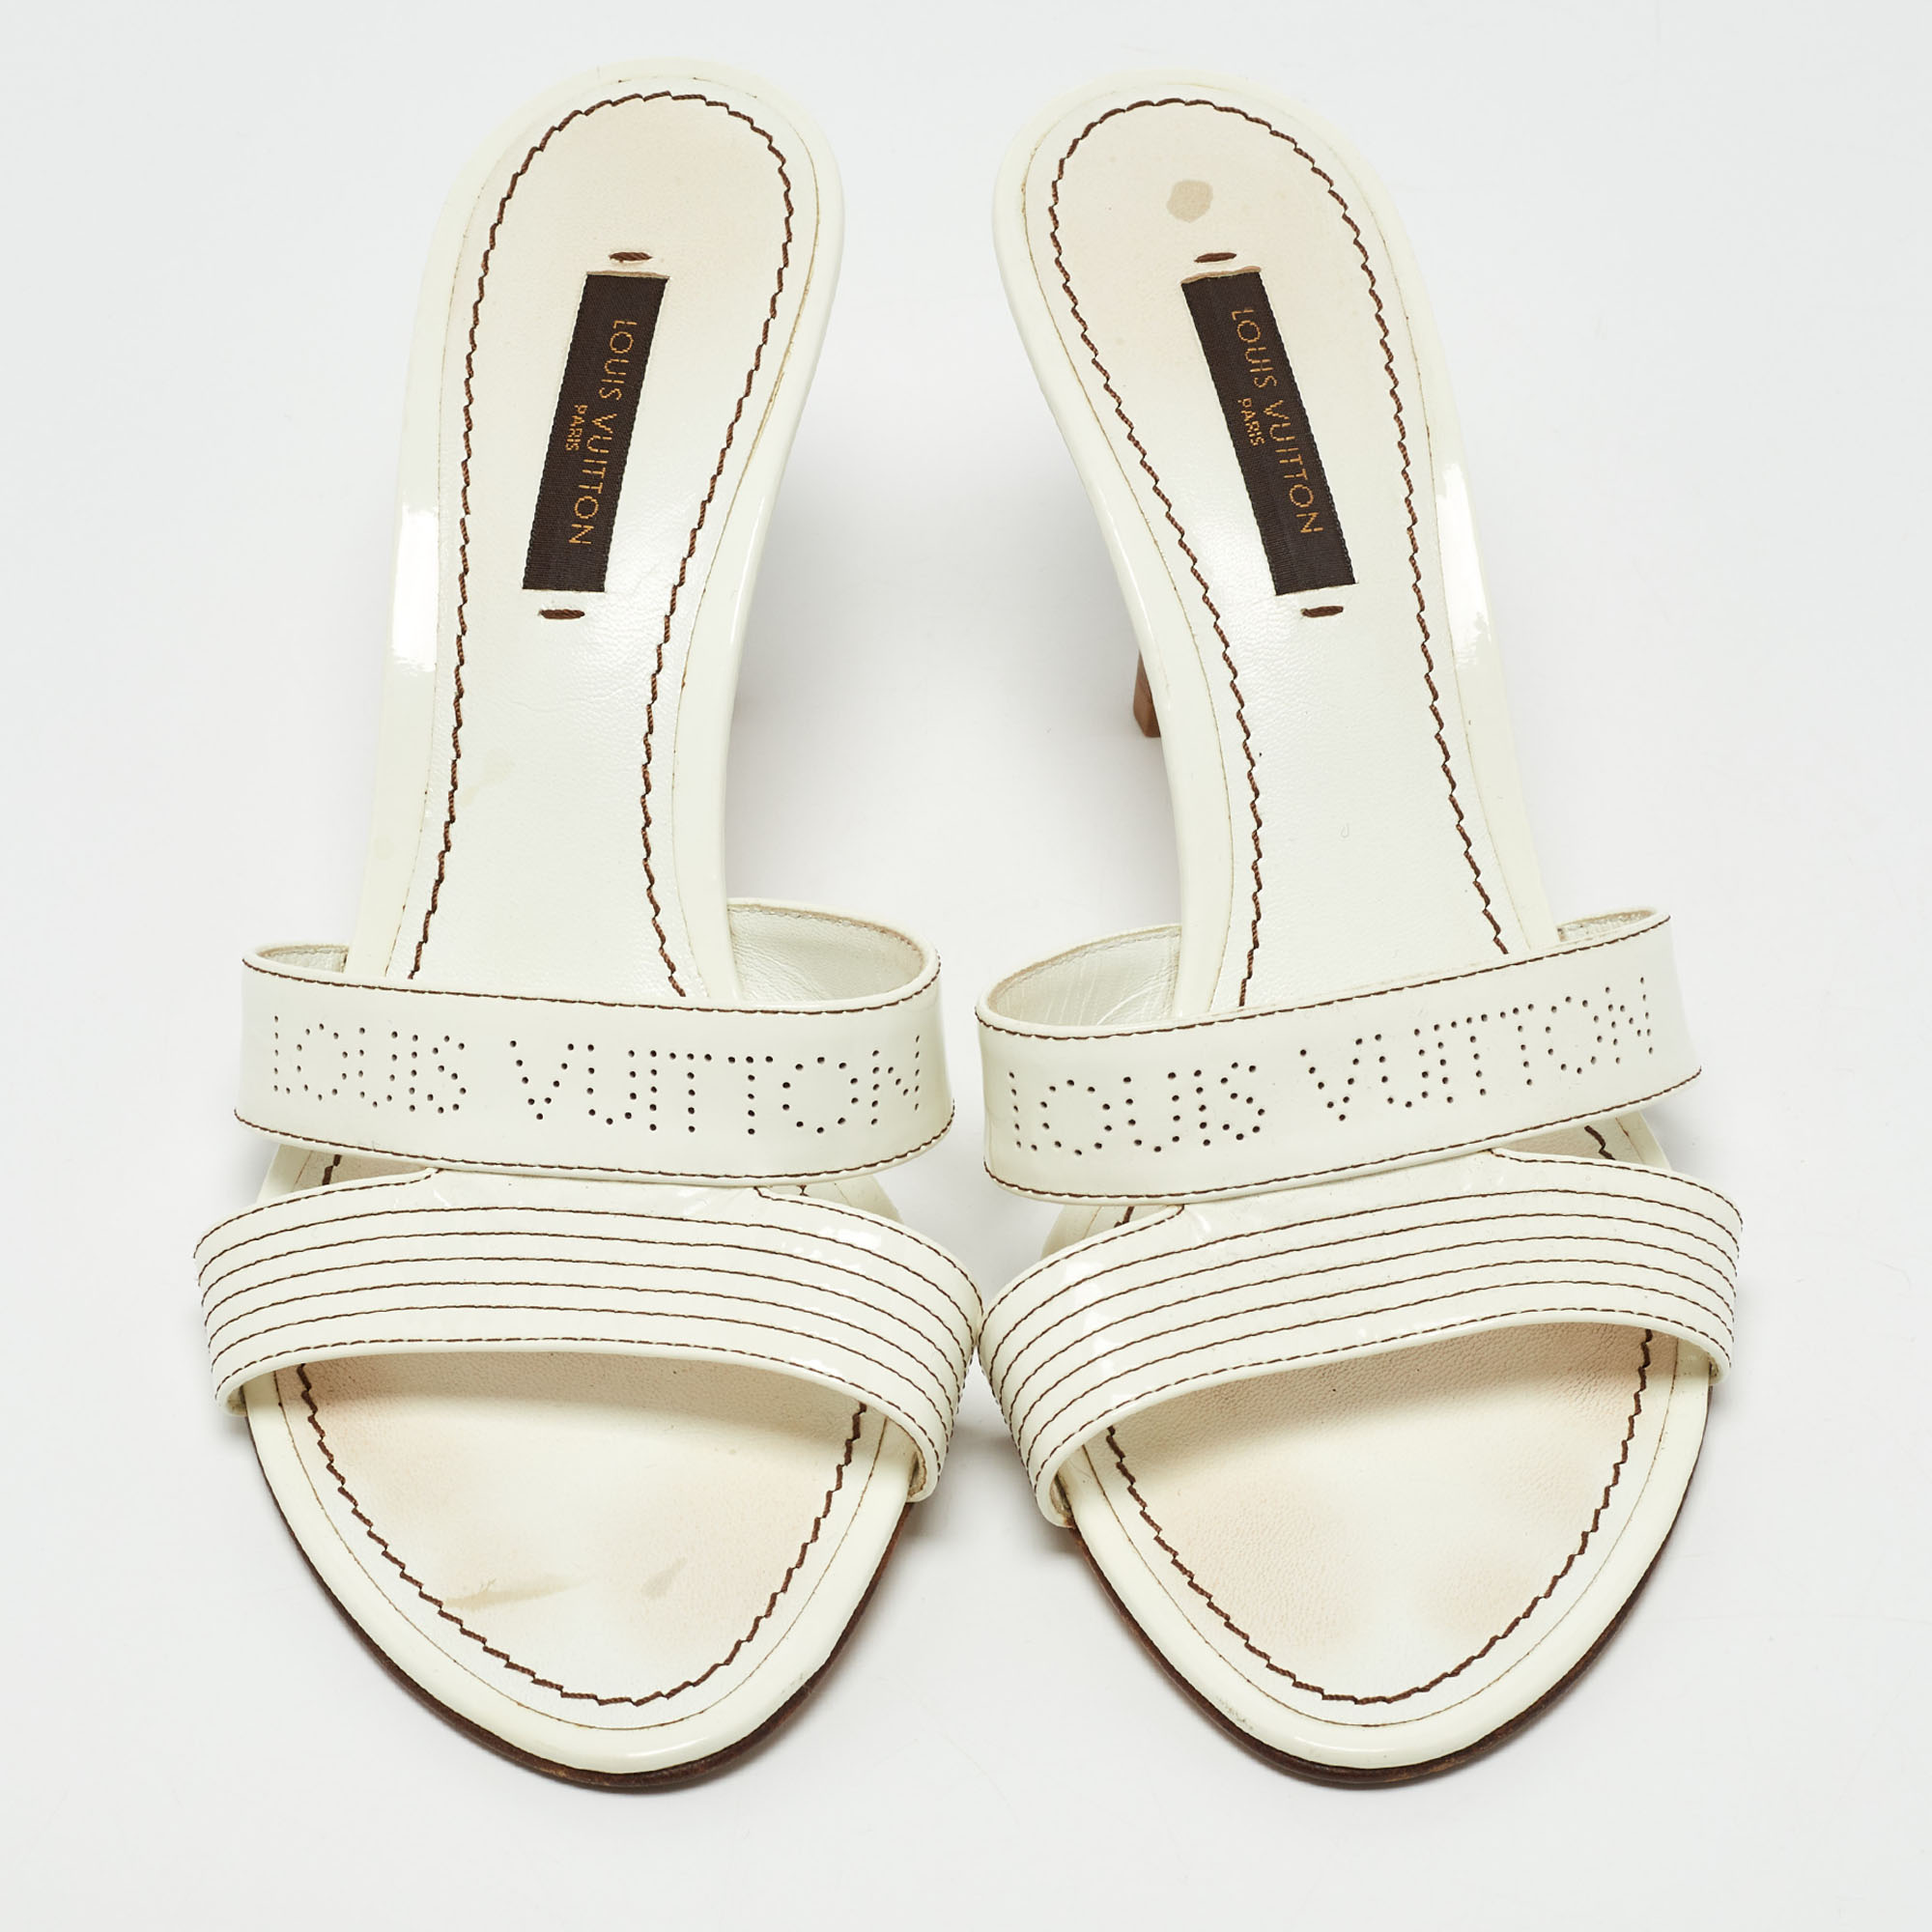 Louis Vuitton White Patent Leather Slide Sandals Size 37